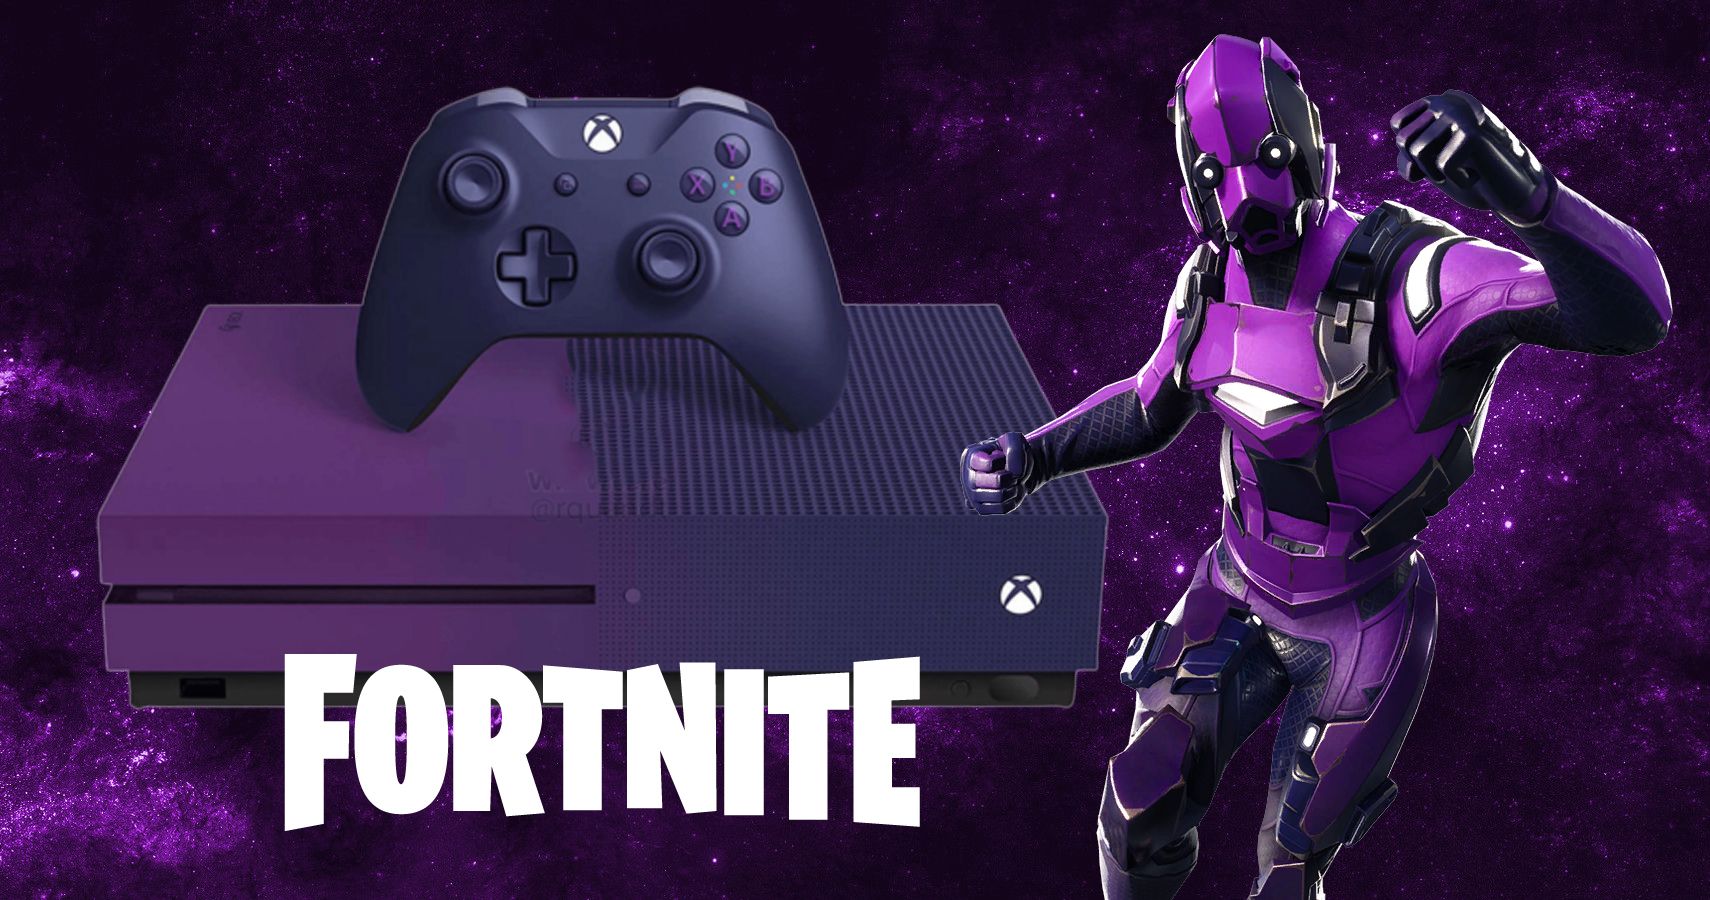 Purple Fortnite Xbox One S Bundle Is Coming Soon With Exclusive Perks - gametiptip.com